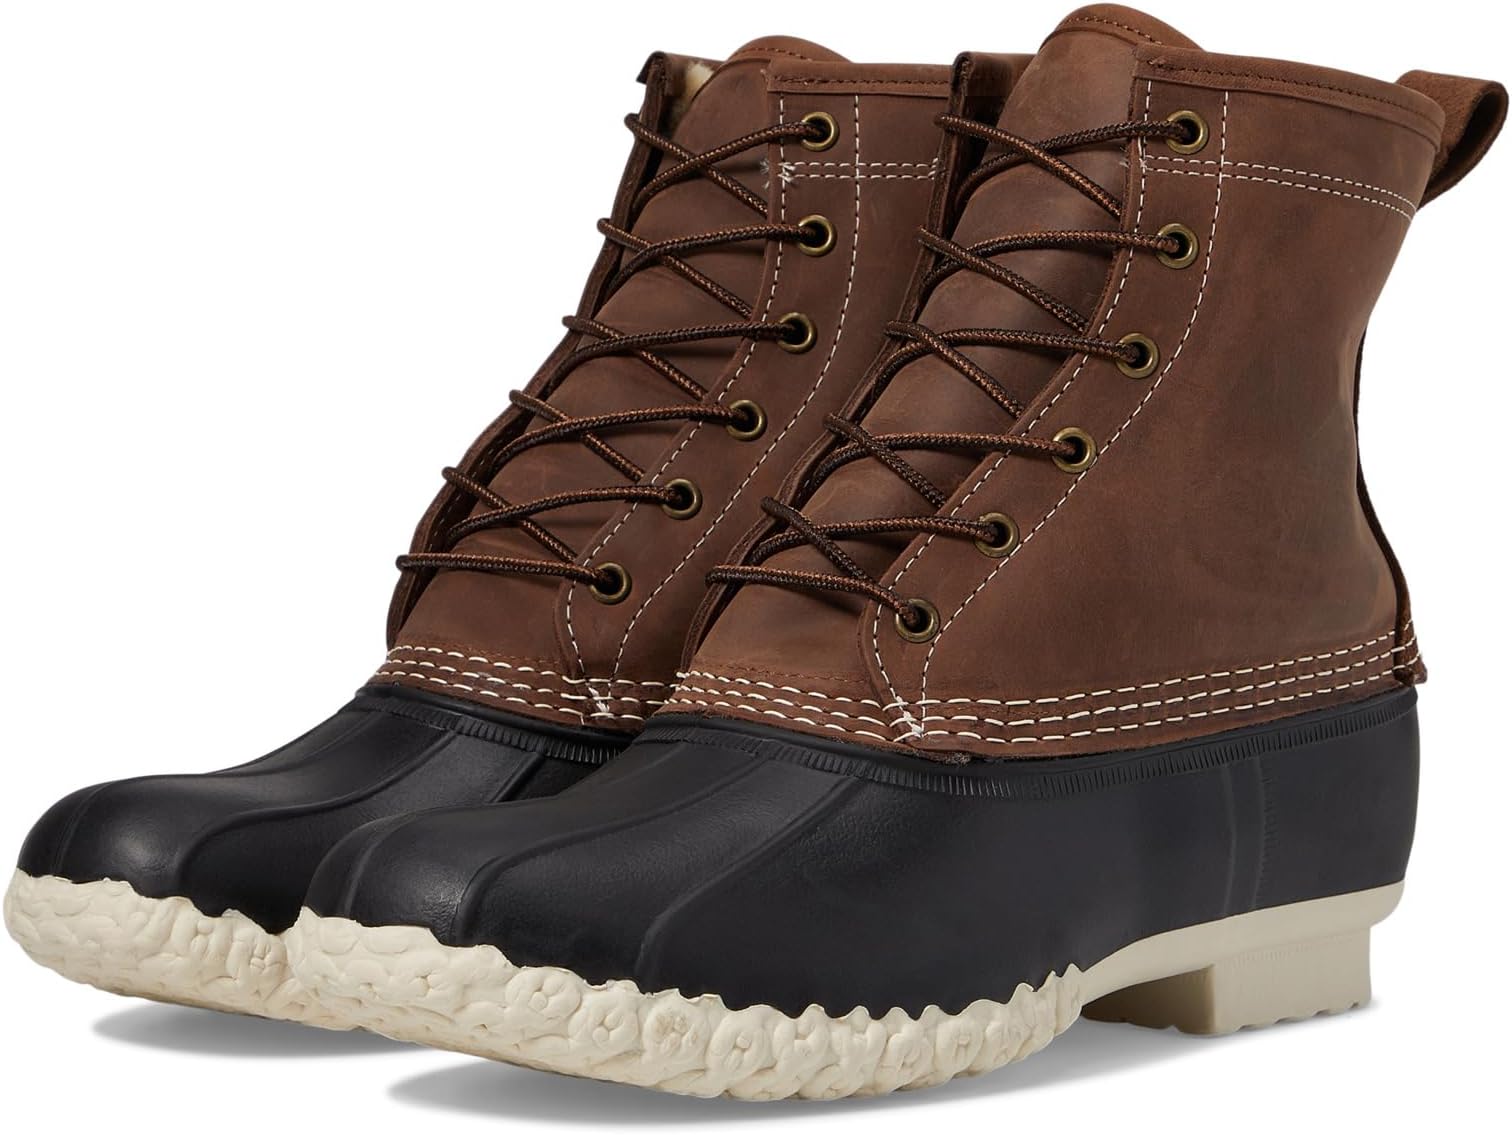 Зимние ботинки Bean Boot 8 Limited Edition Leather Shearling Lined L.L.Bean, цвет Dark Earth/Black/Natural